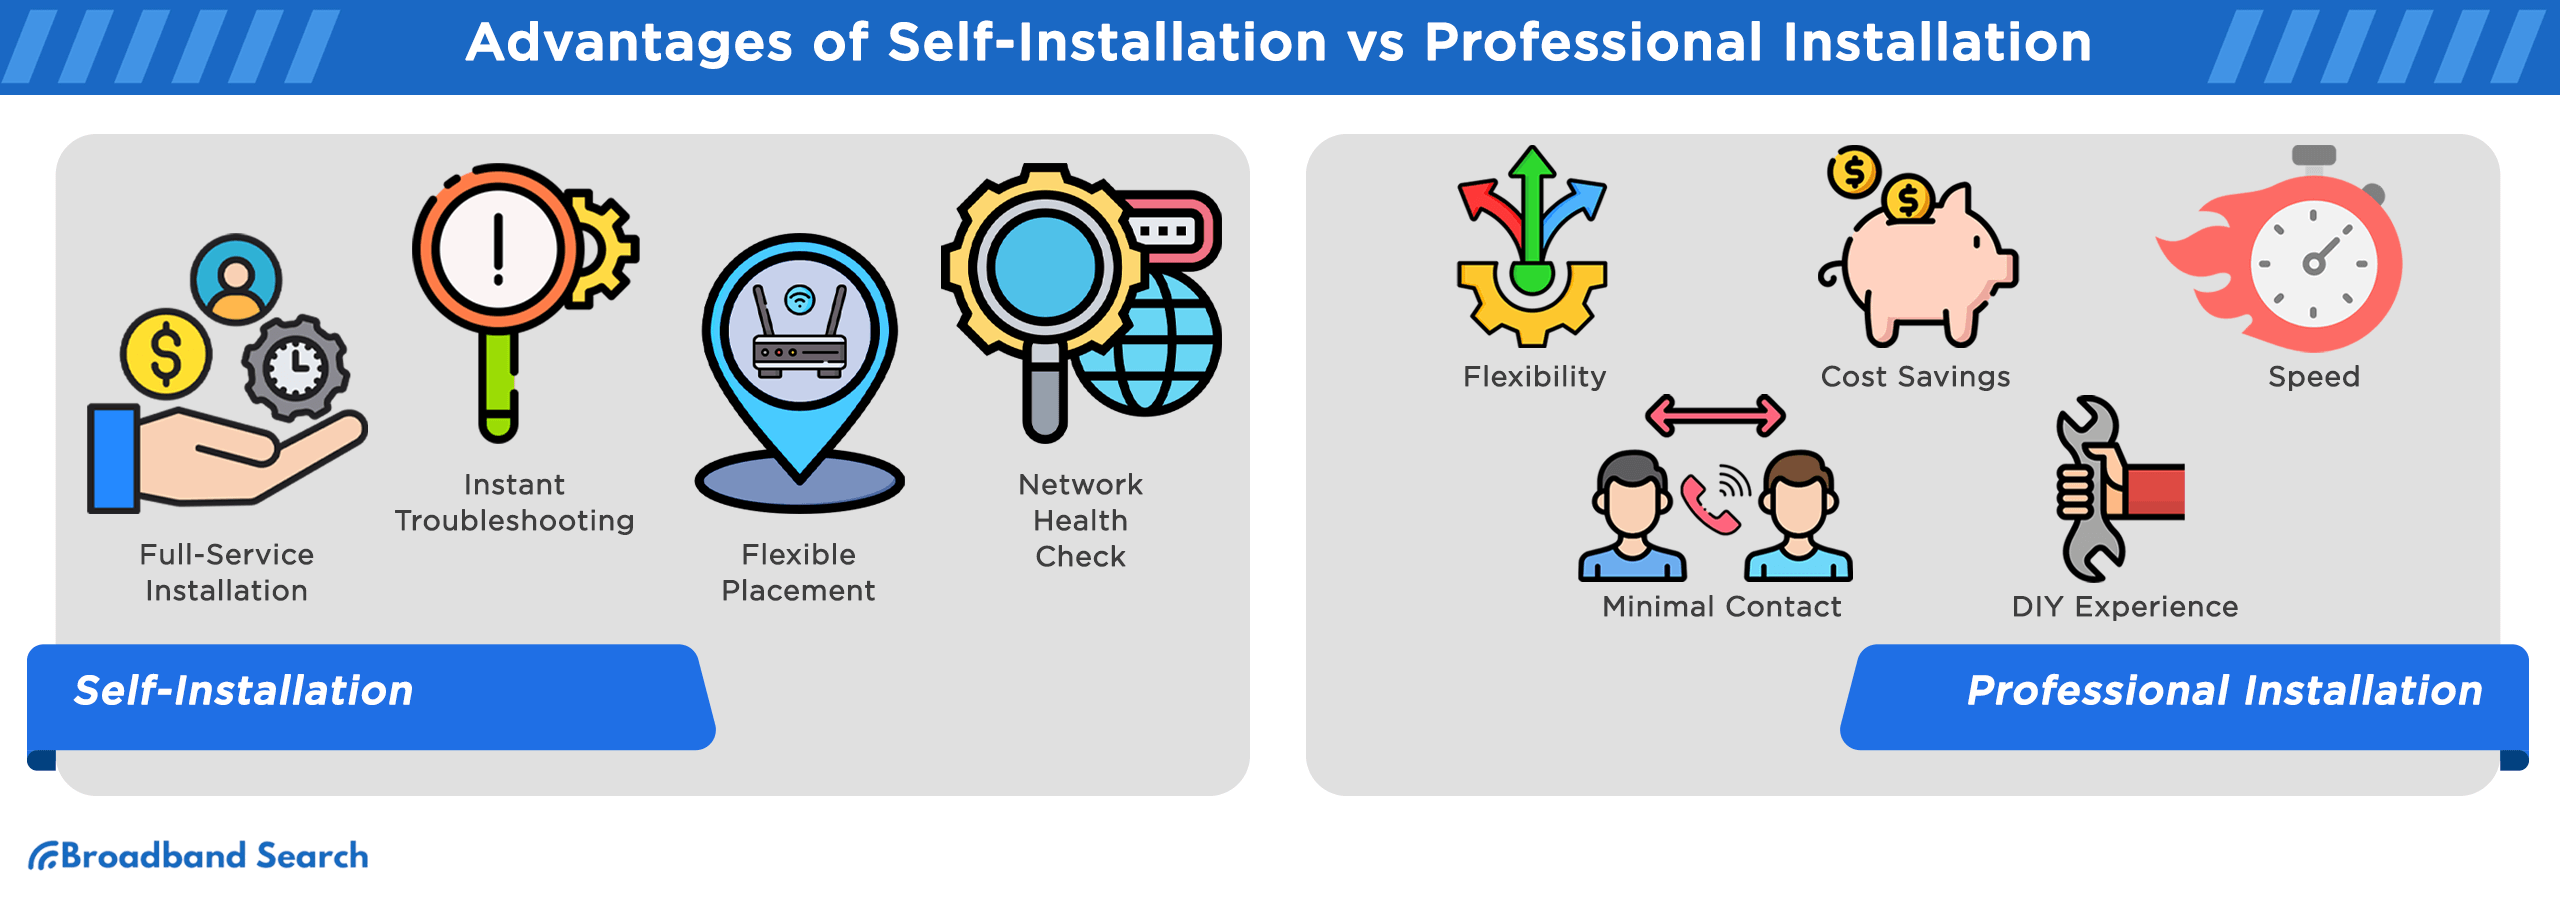 Advantages of self-installation vs professional installation